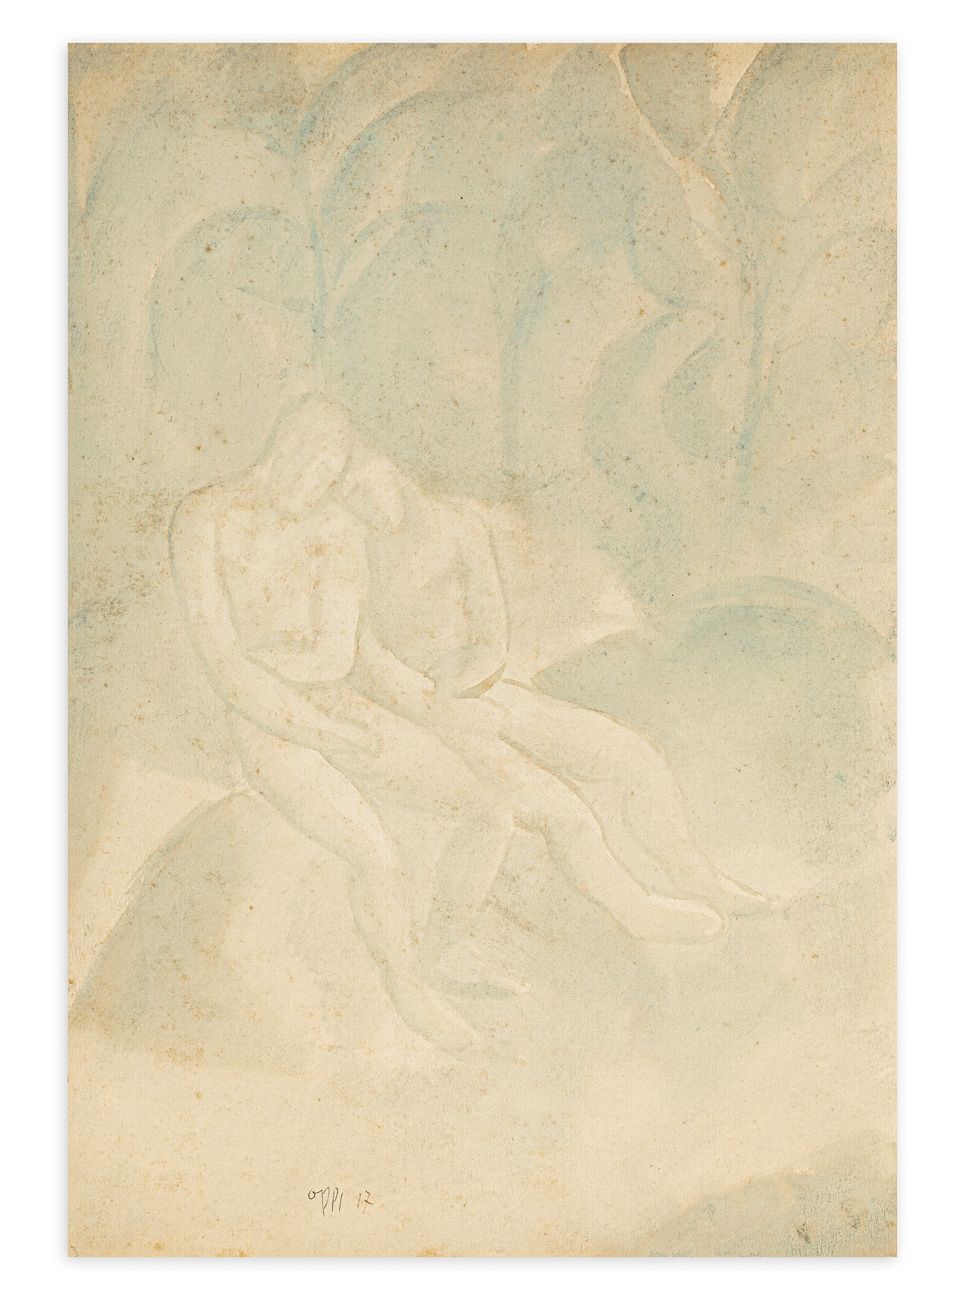 UBALDO OPPI (1889-1942) - Senza Titolo, 1917 纸上水彩画应用于纸板上

cm 43,1x29,4

签名和日期在前面&hellip;